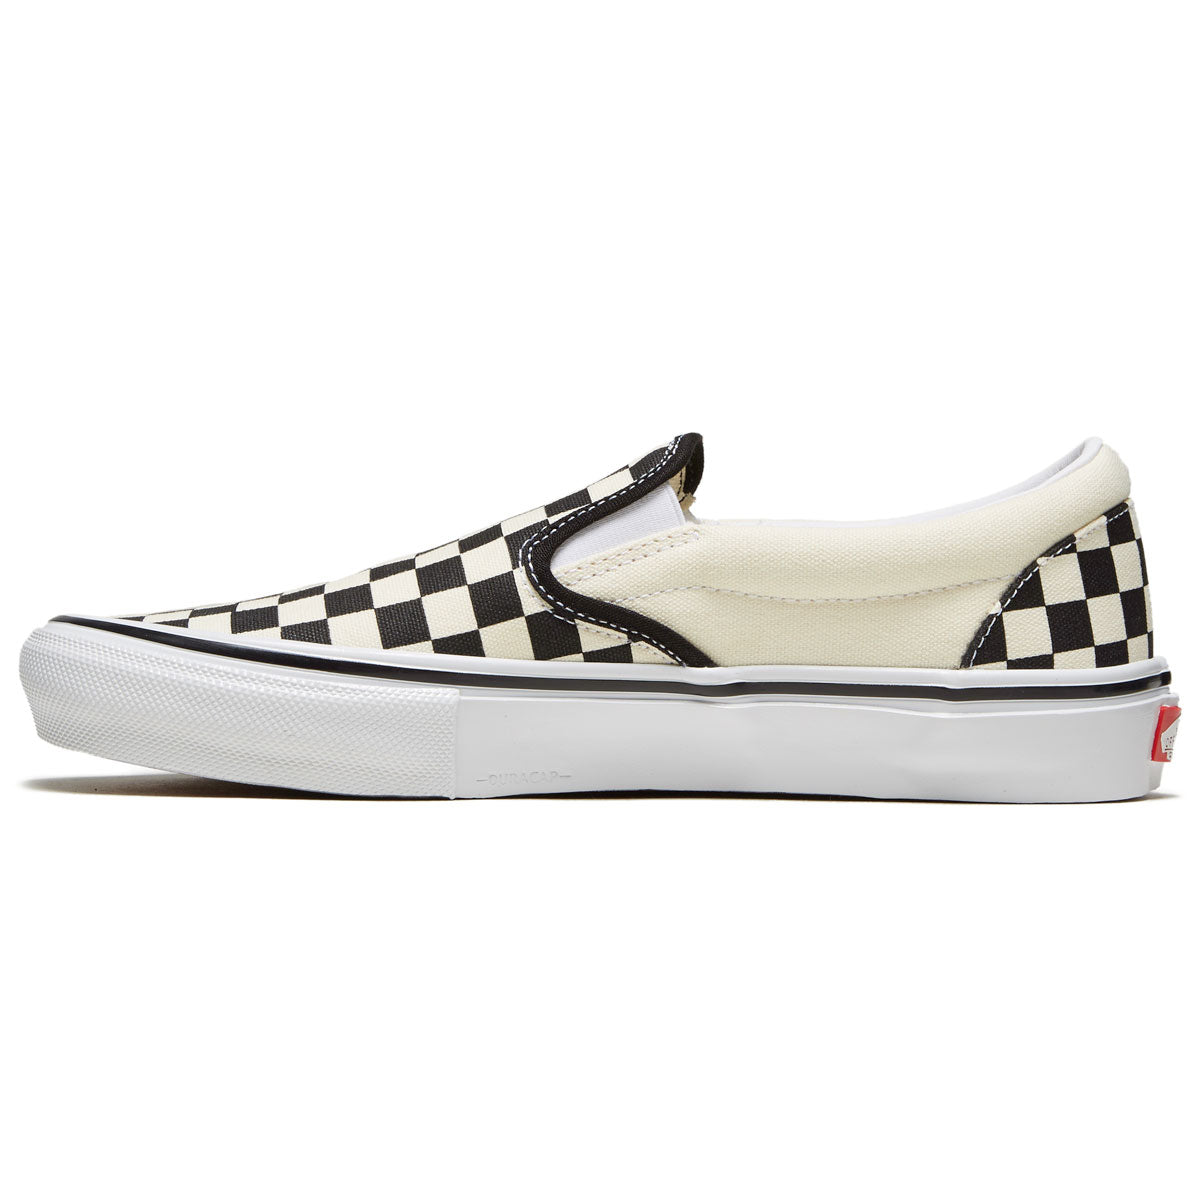 Vans Skate Slip-on Shoes - Checkerboard Black/Off White image 2